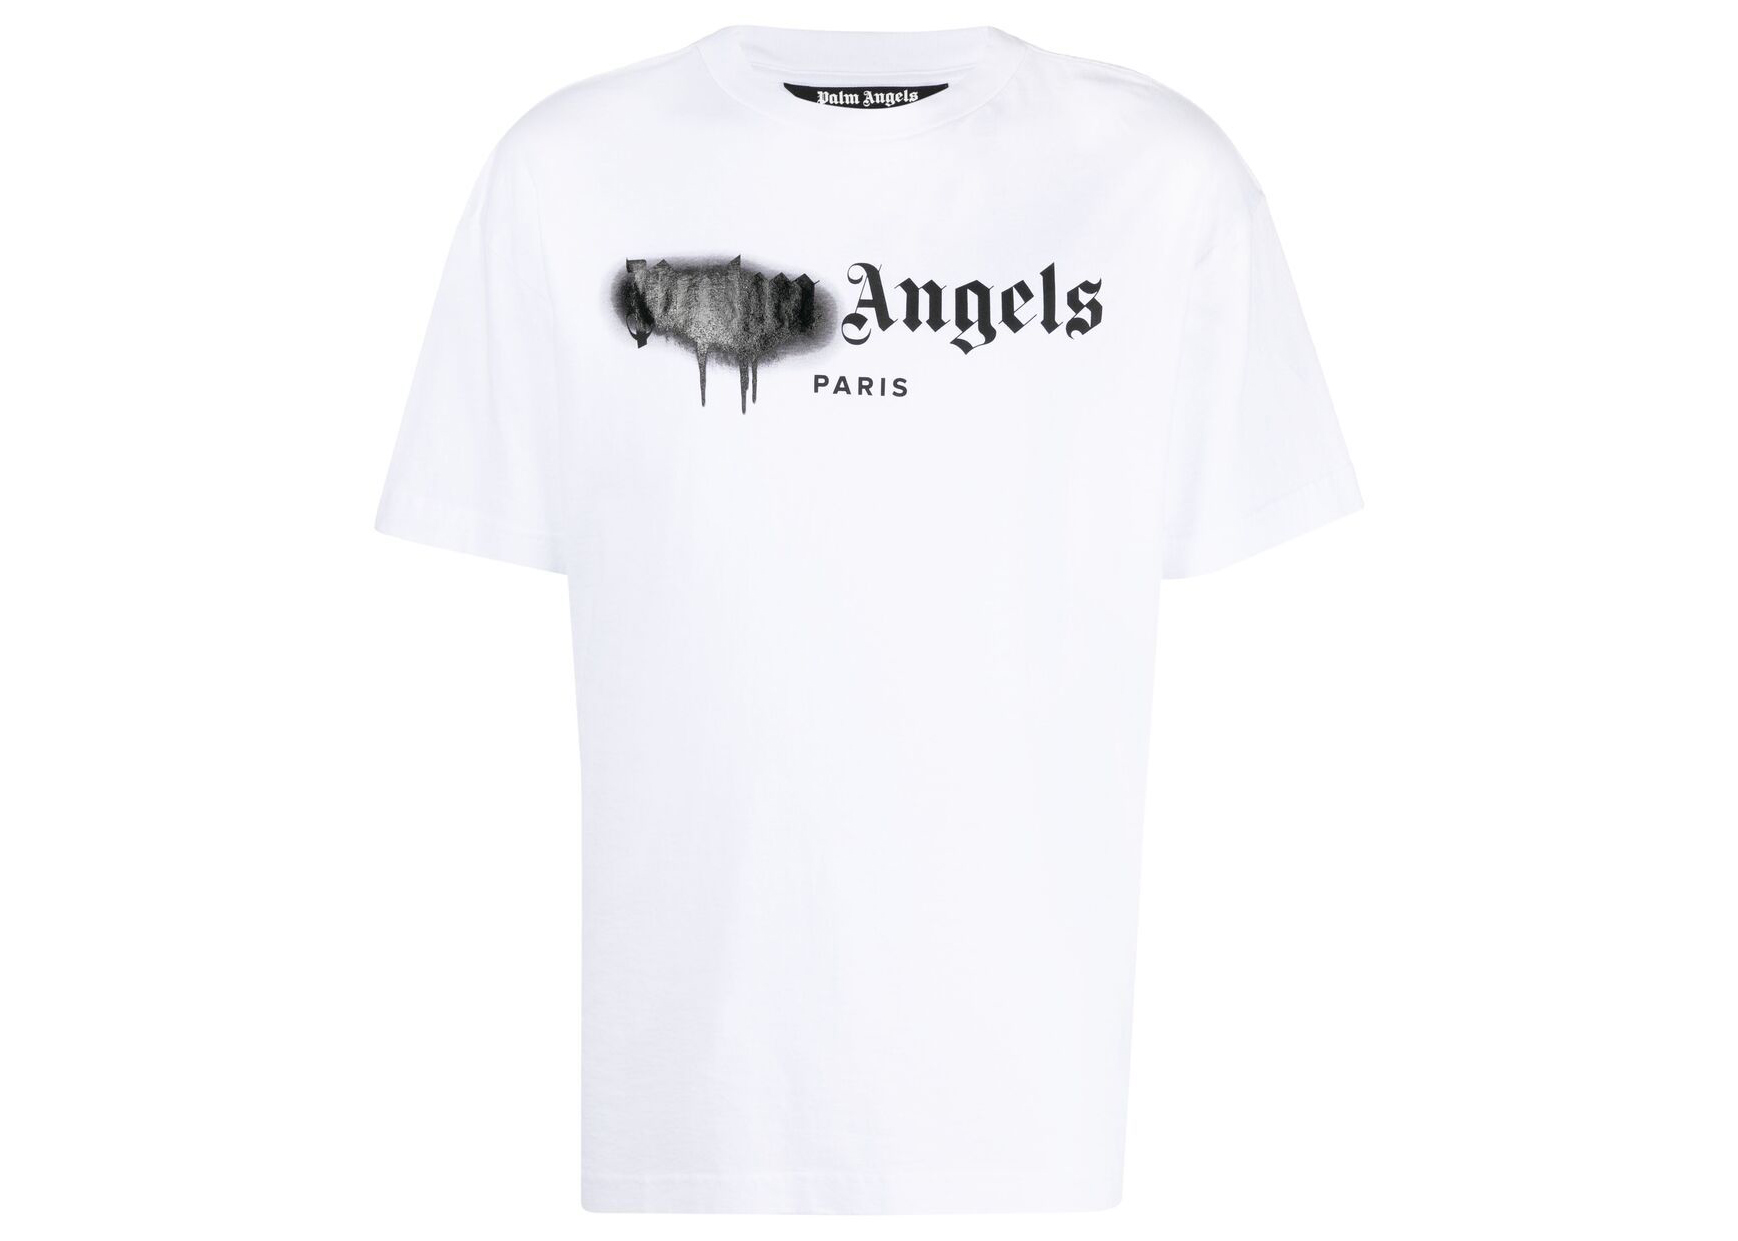 Palm angels T-shirt’s